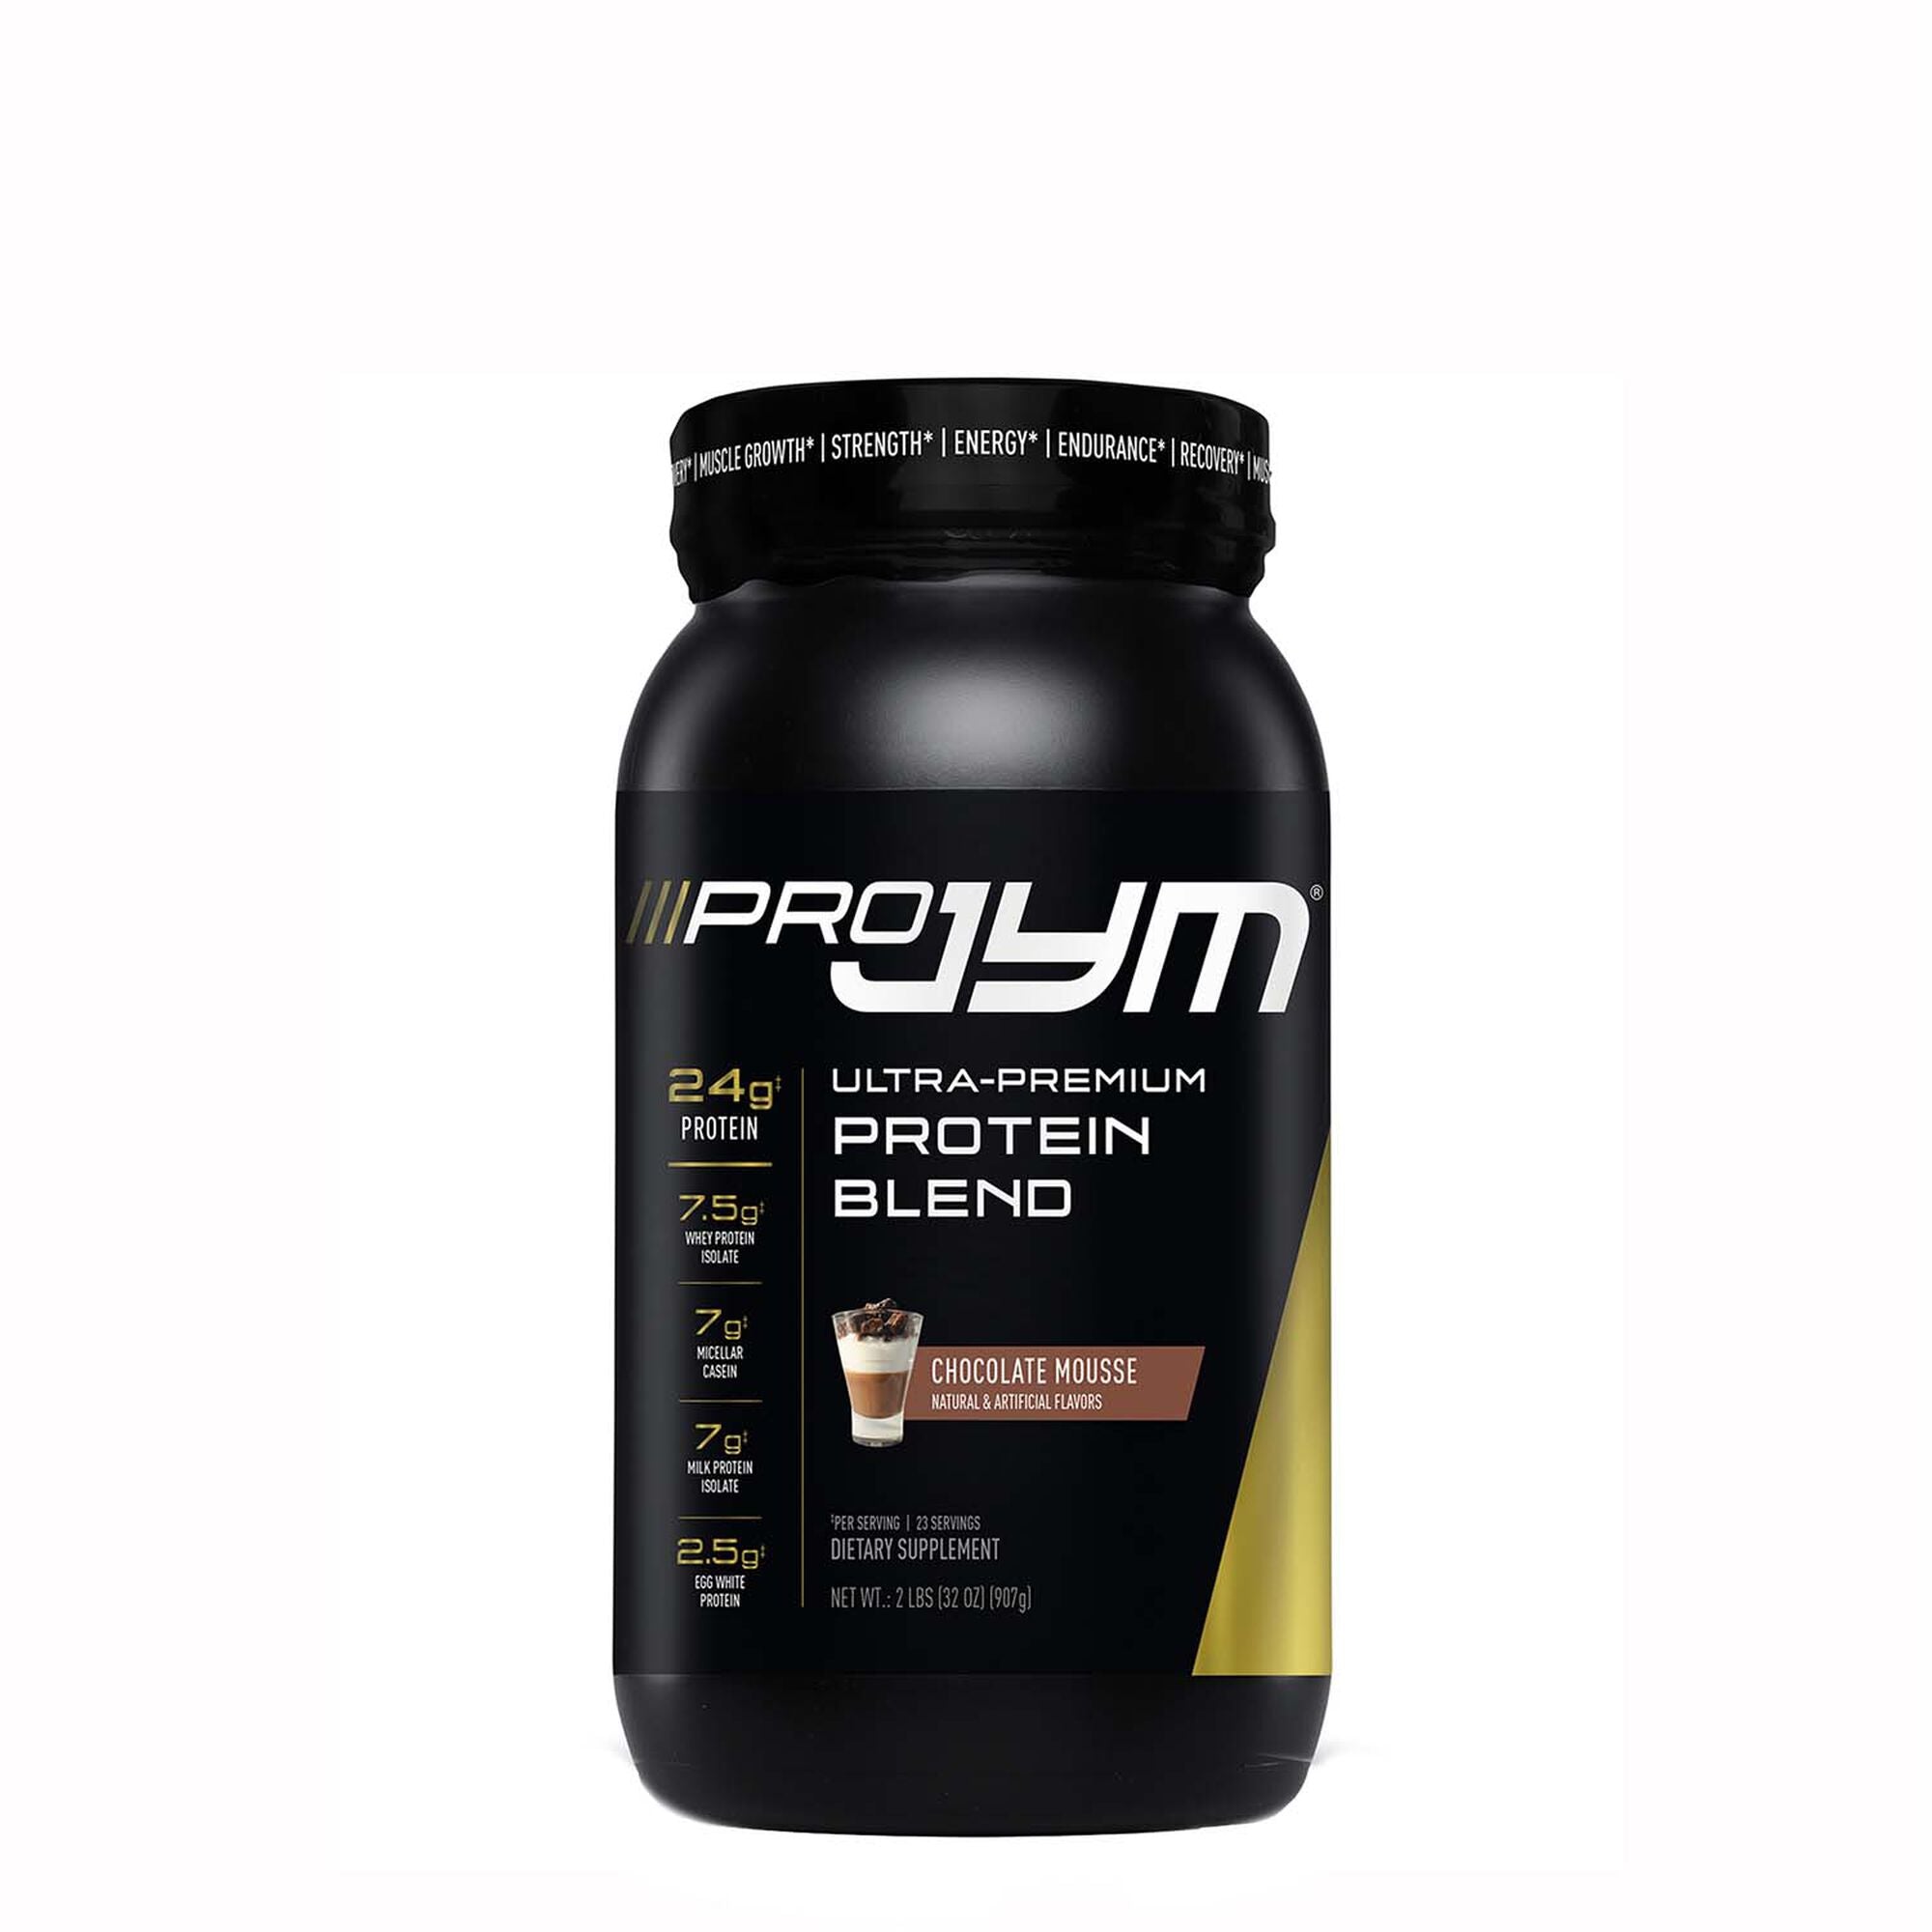 PRO JYM Ultra-Premium Protein Blend 2 lbs